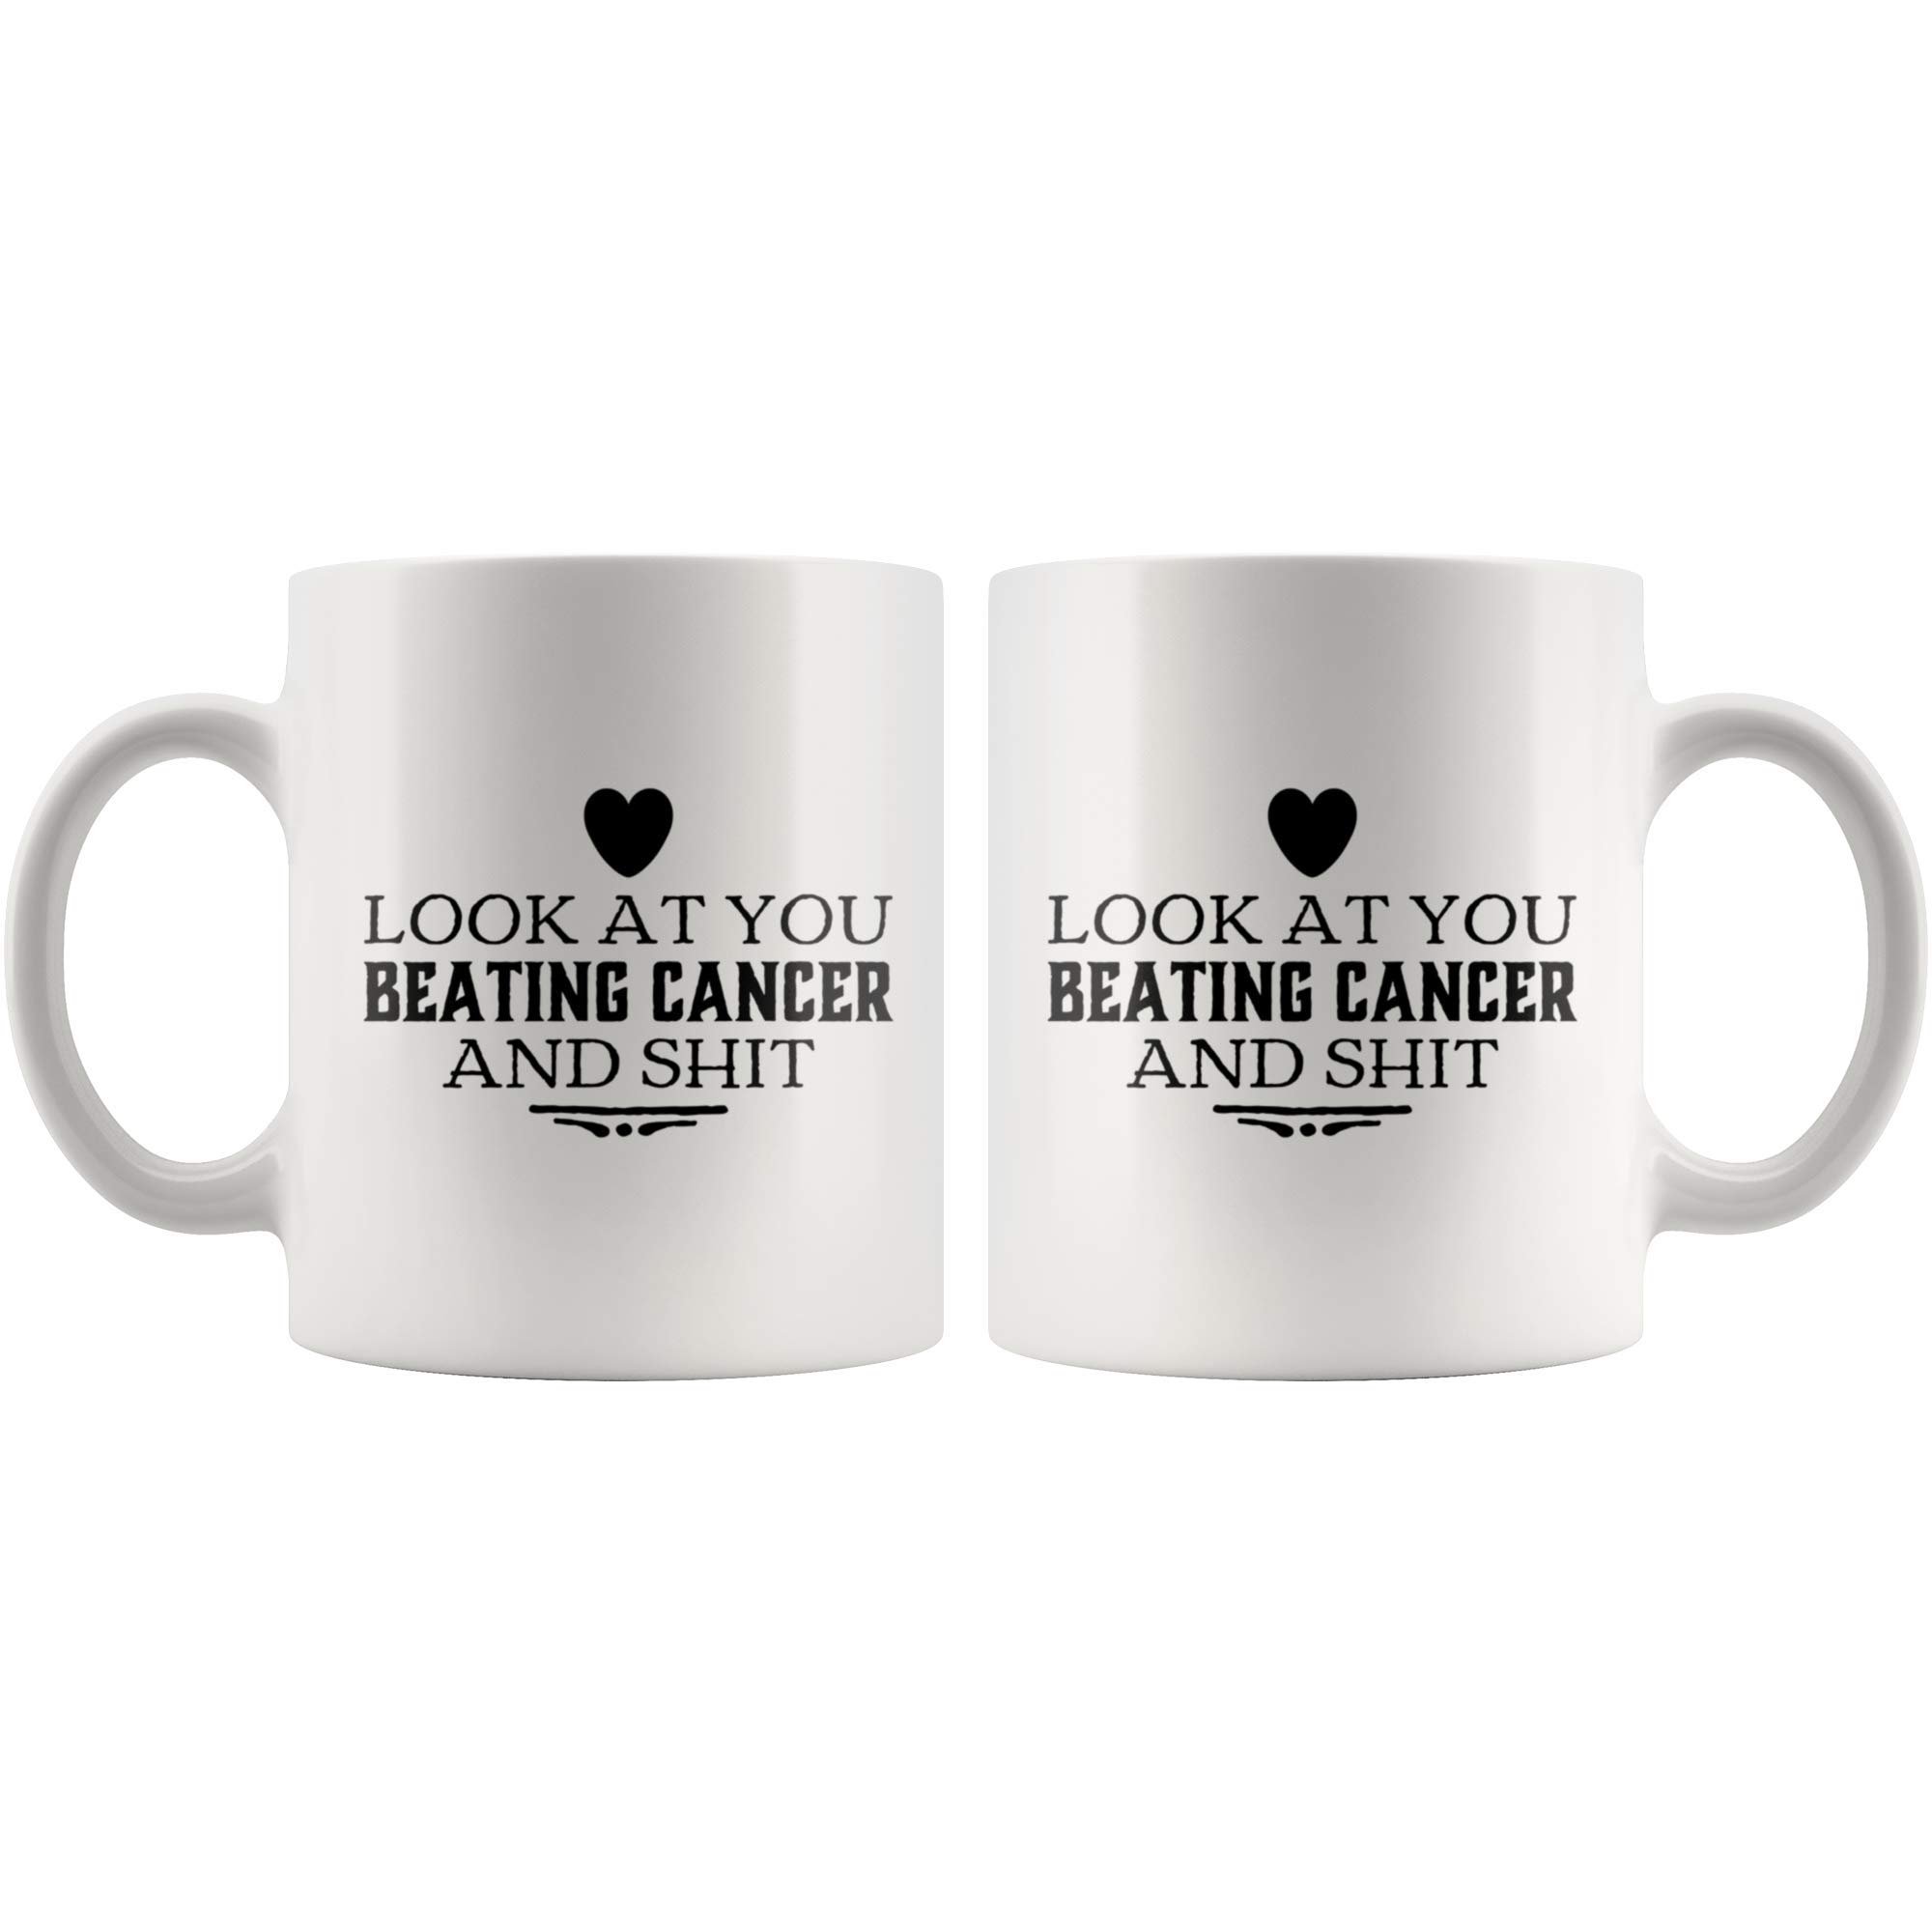 Panvola Look At You Beating Cancer And S Cancer Survivor Awareness Ceramic Coffee Mug Motivational Inspirational Gift (11 oz)